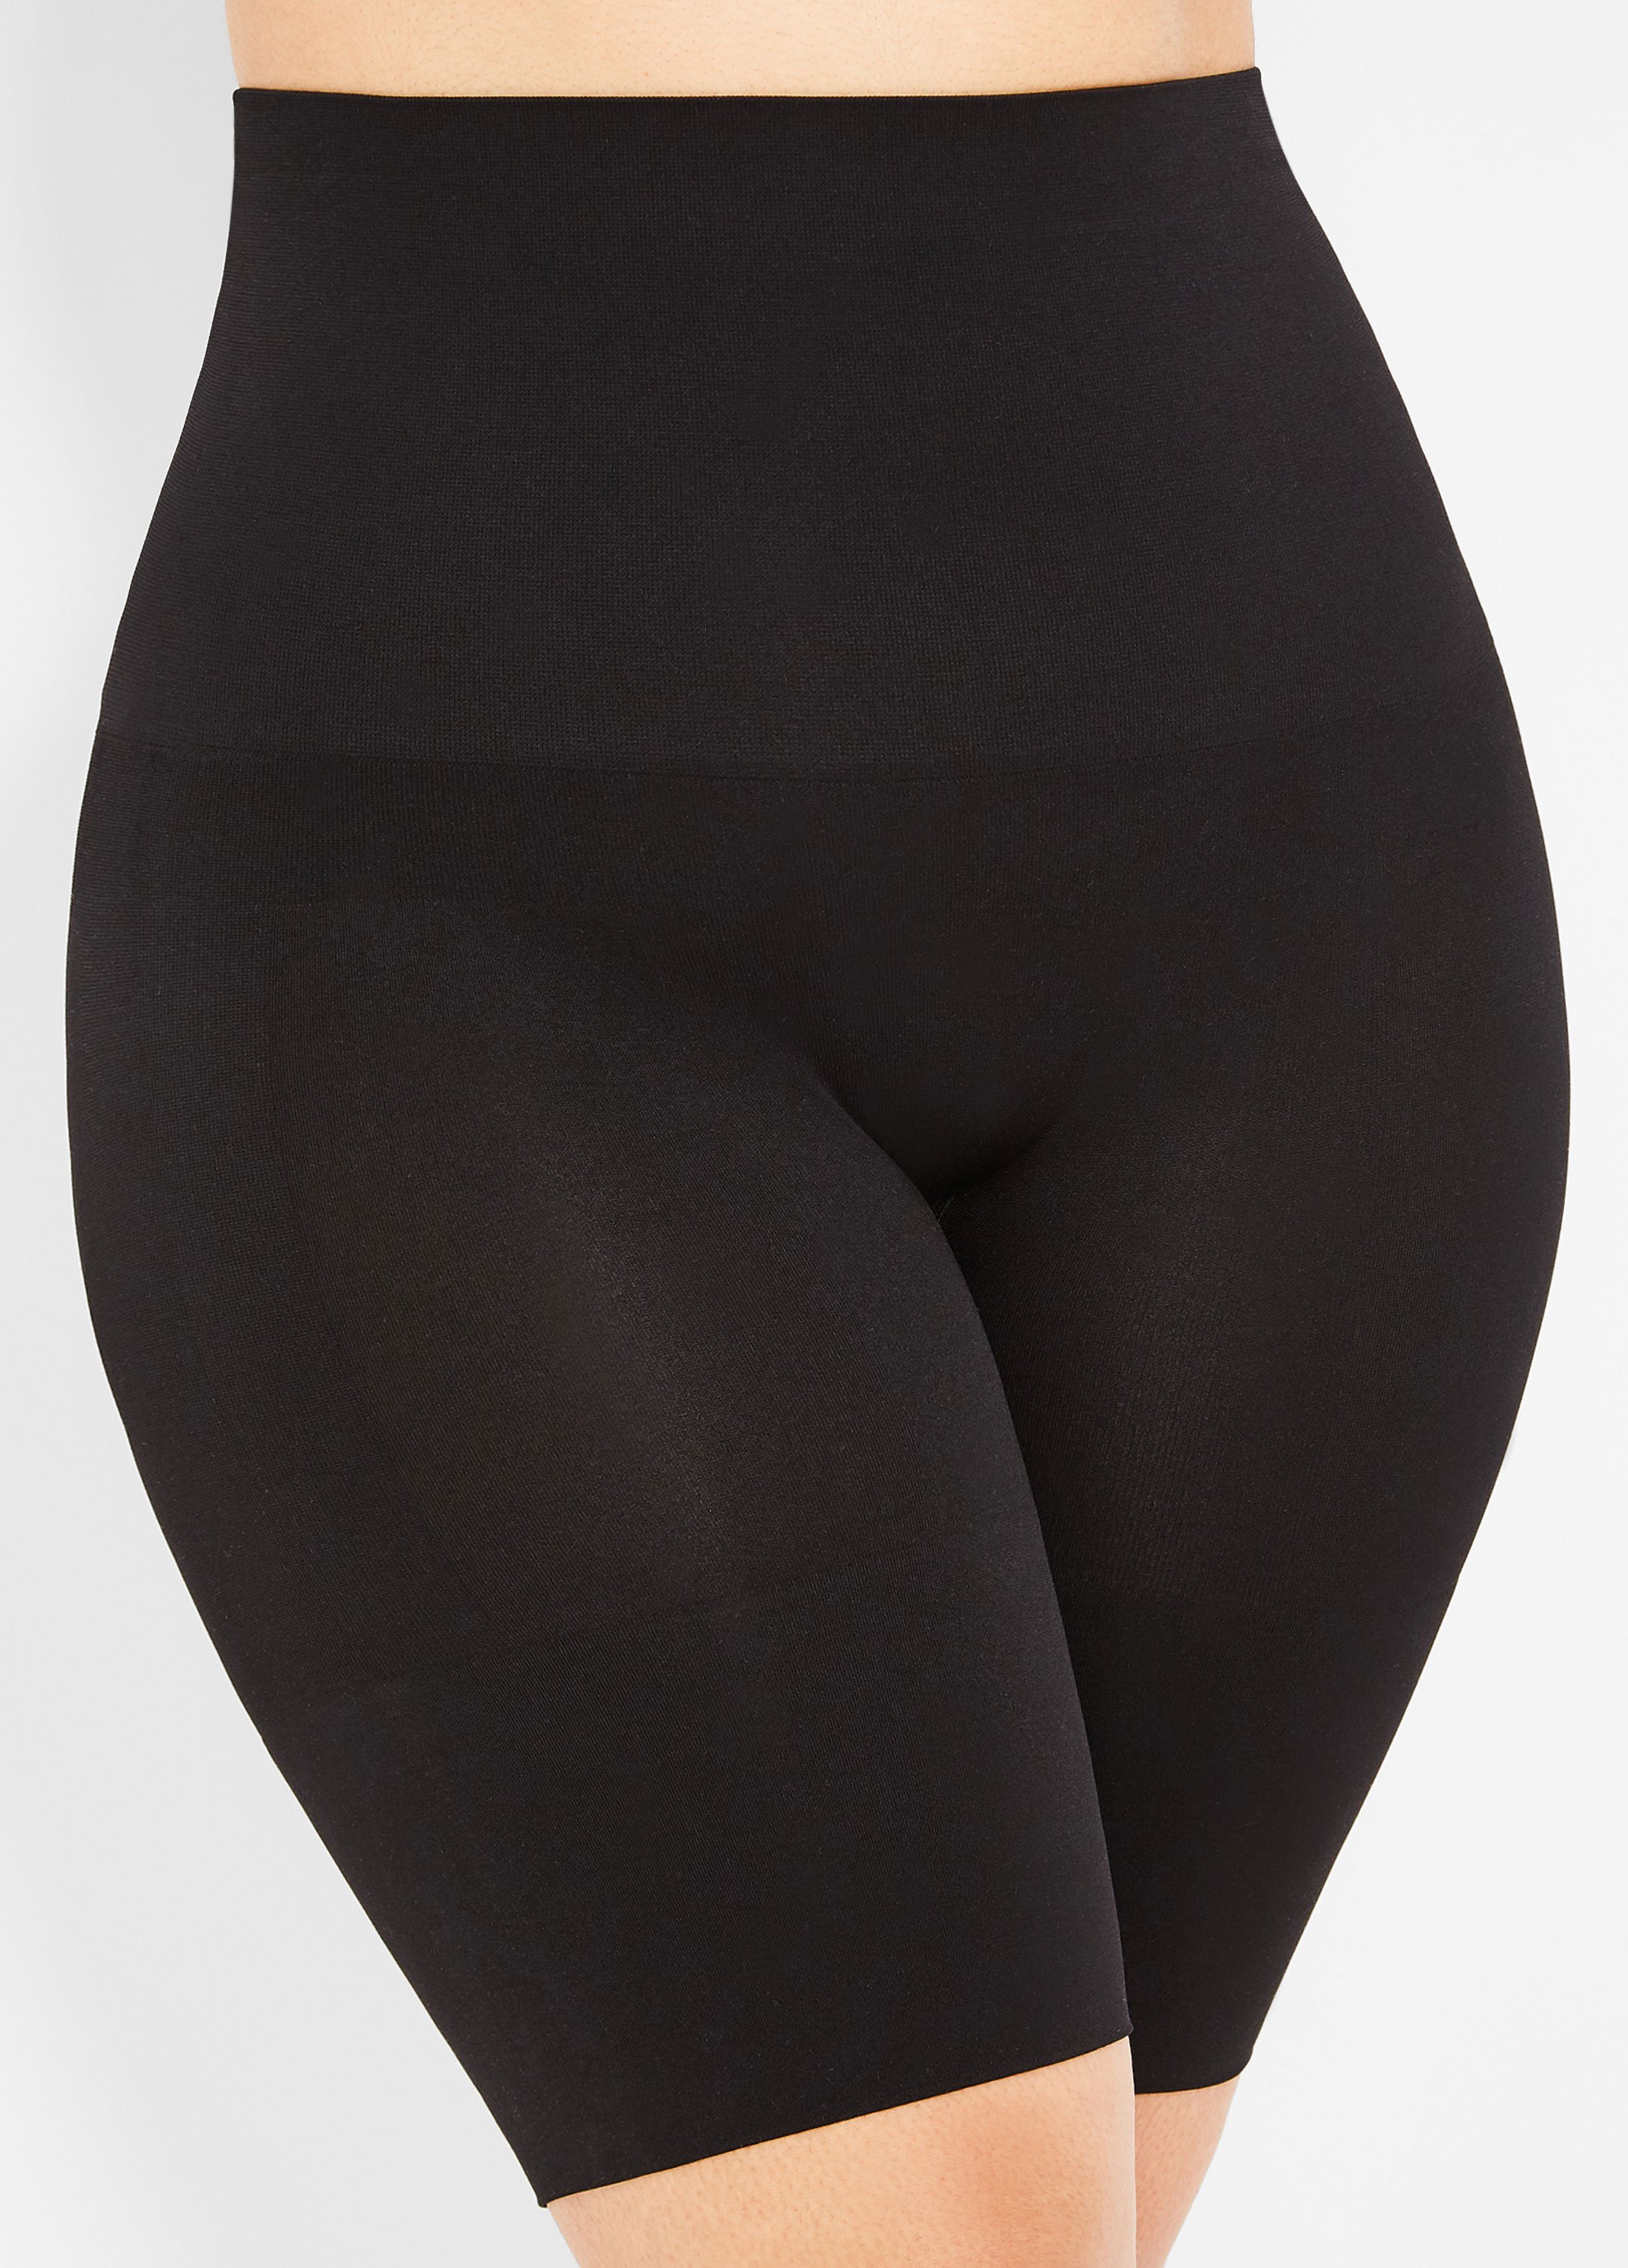 Plus Size Firm Long Leg Shaper Shorts, BLACK, XL - Ashley Stewart